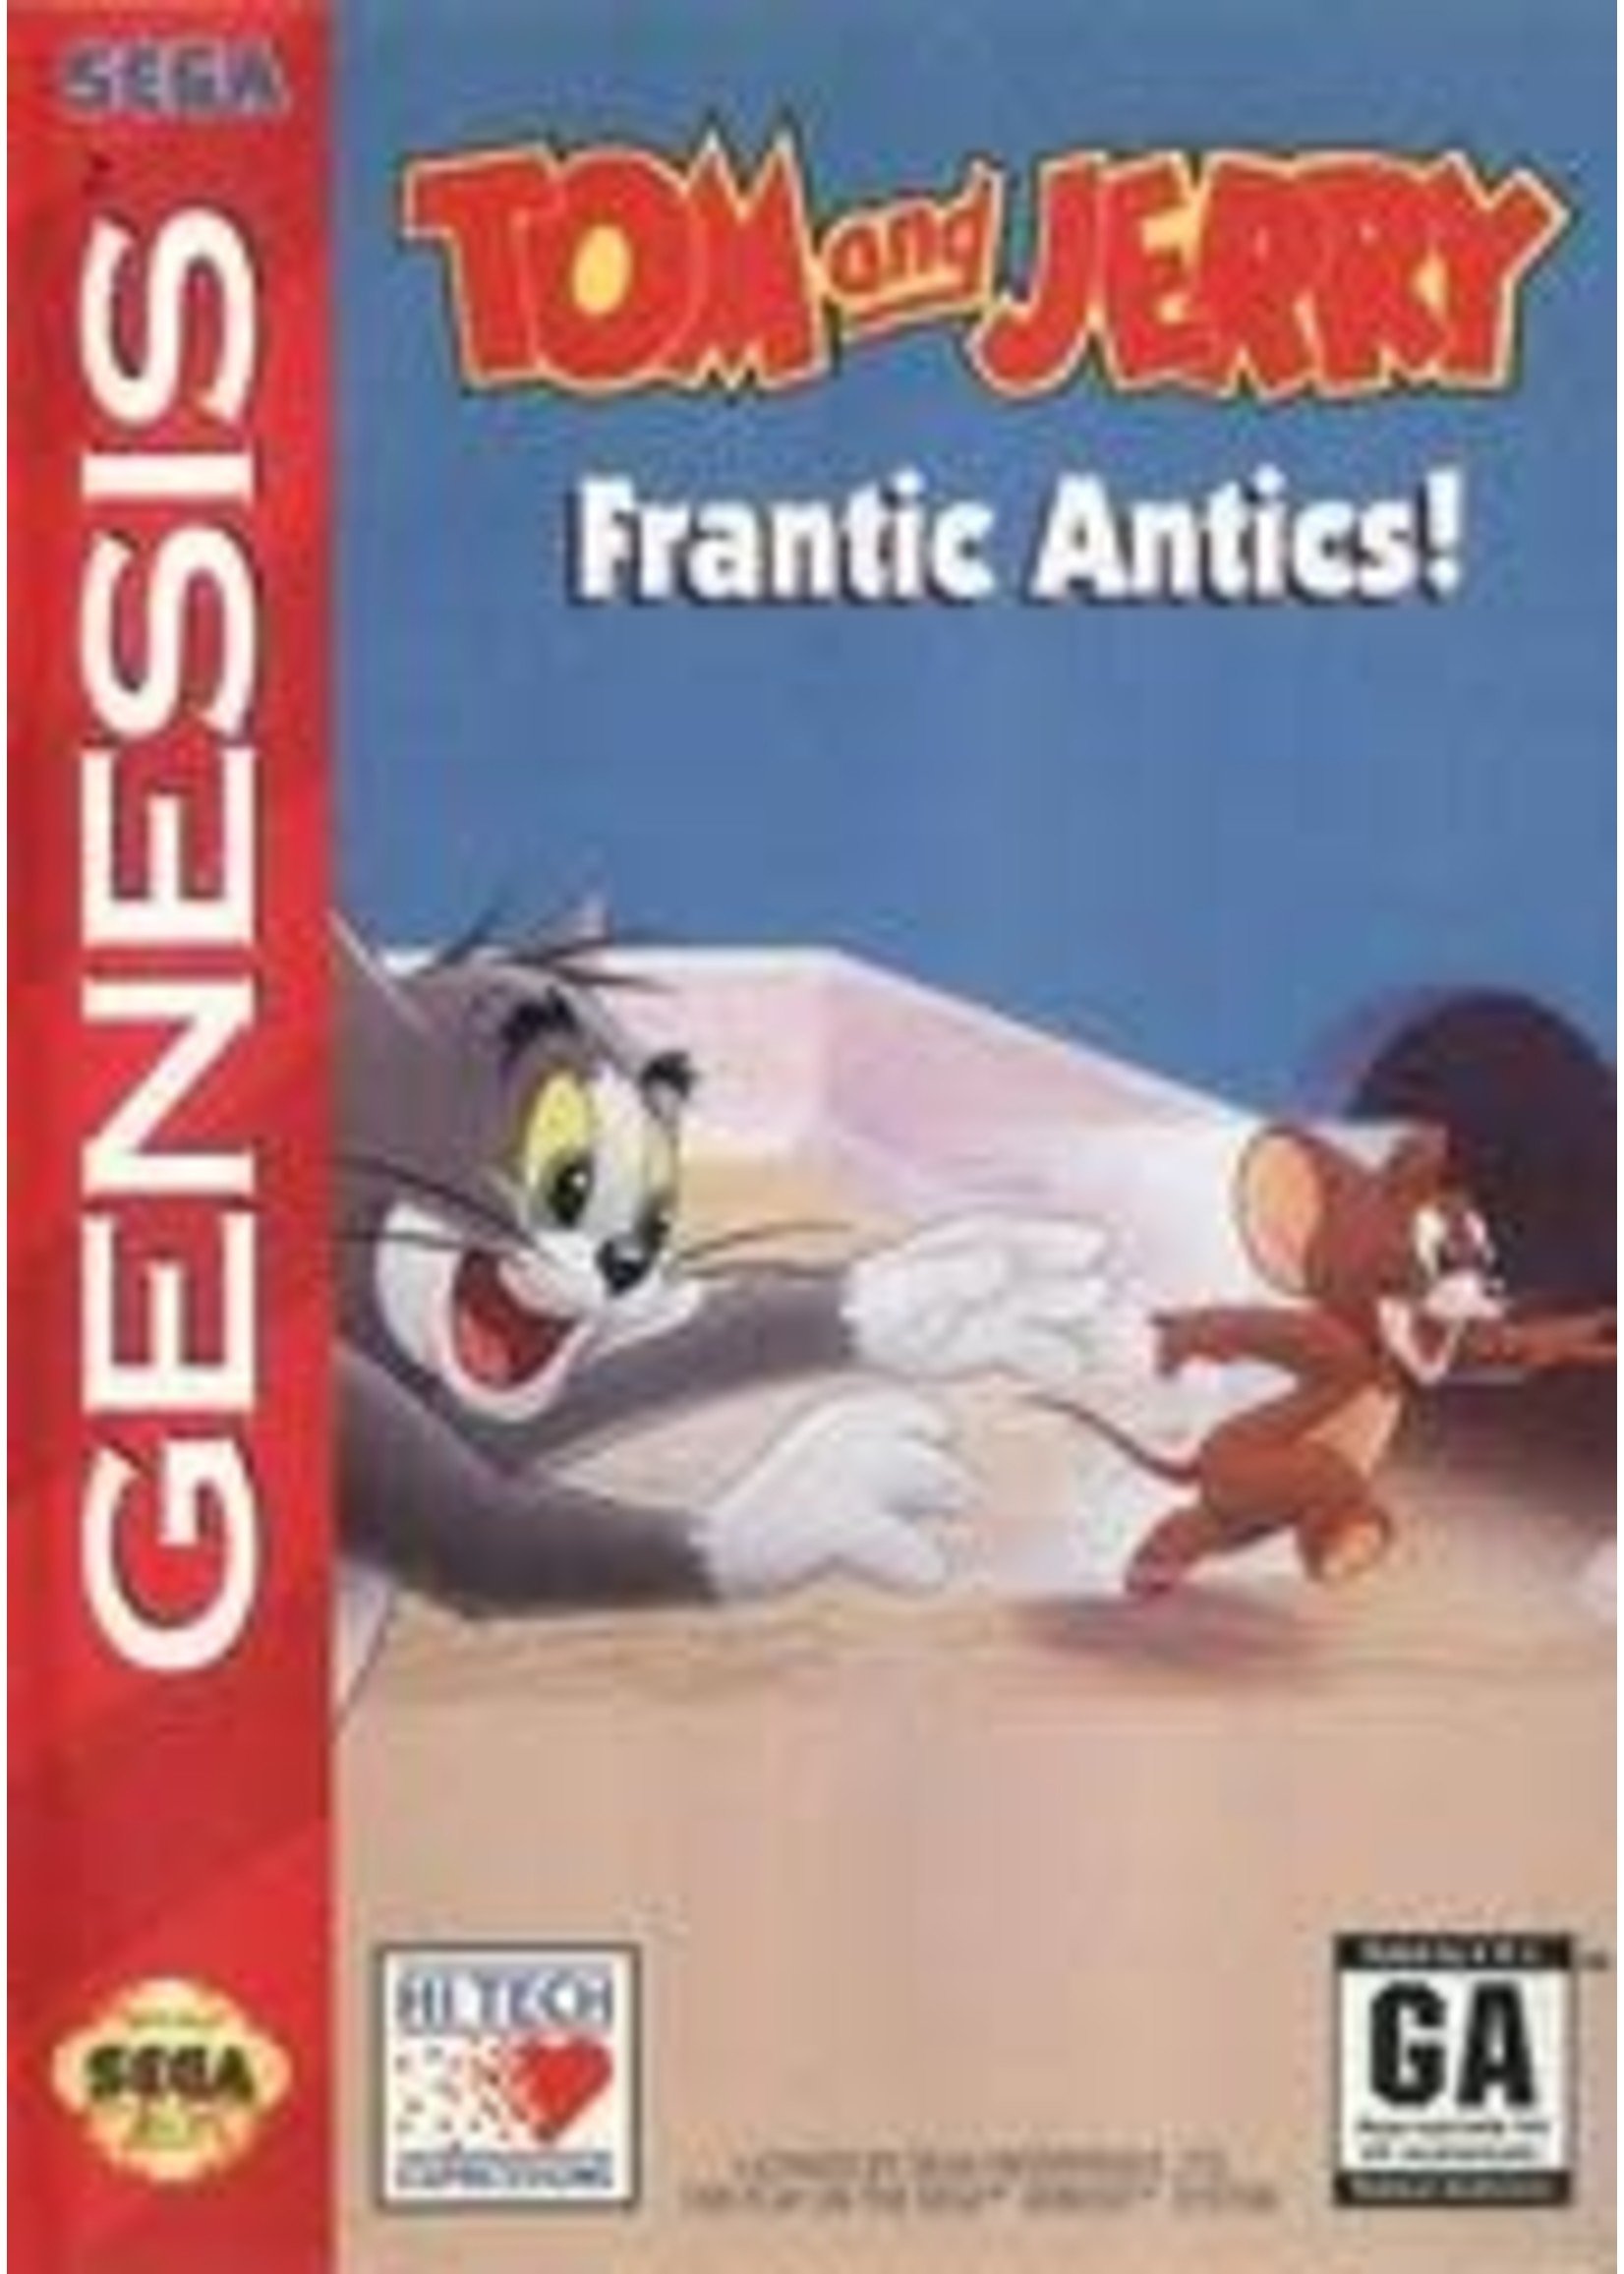 Tom And Jerry Frantic Antics Sega Genesis